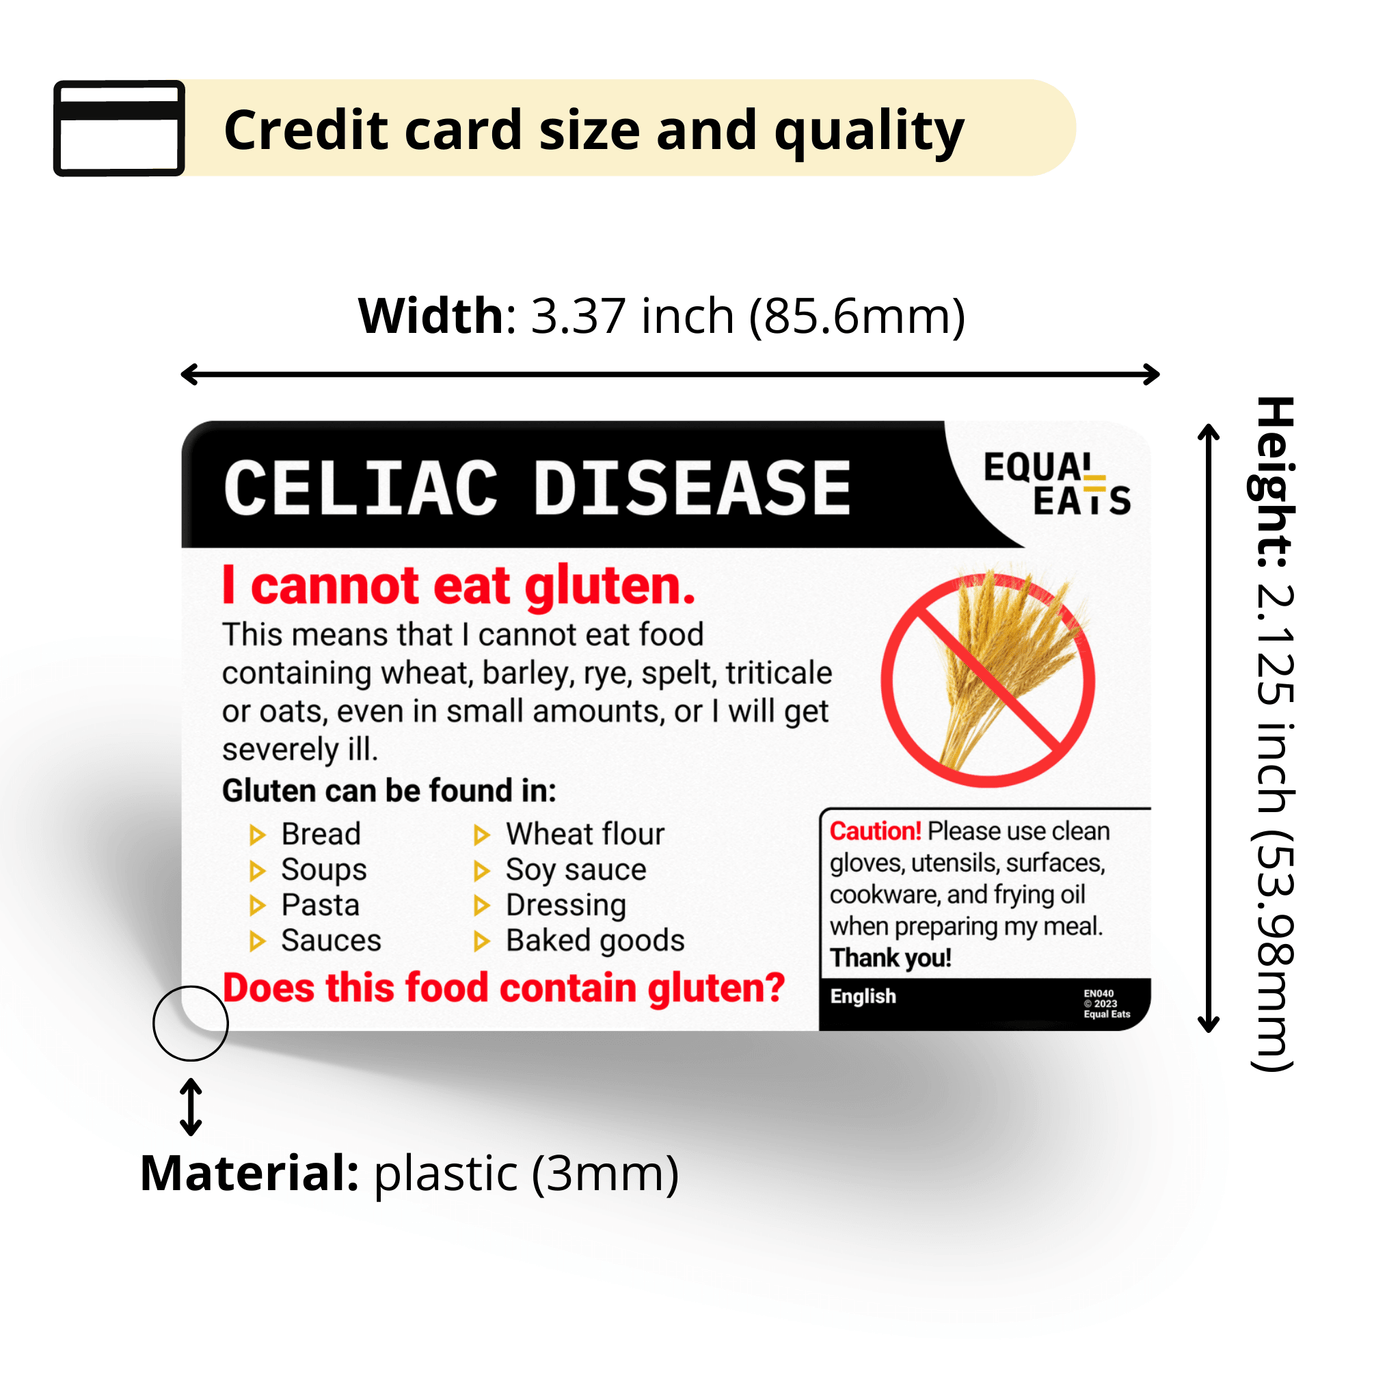 Portuguese (Portugal) Celiac Disease Card